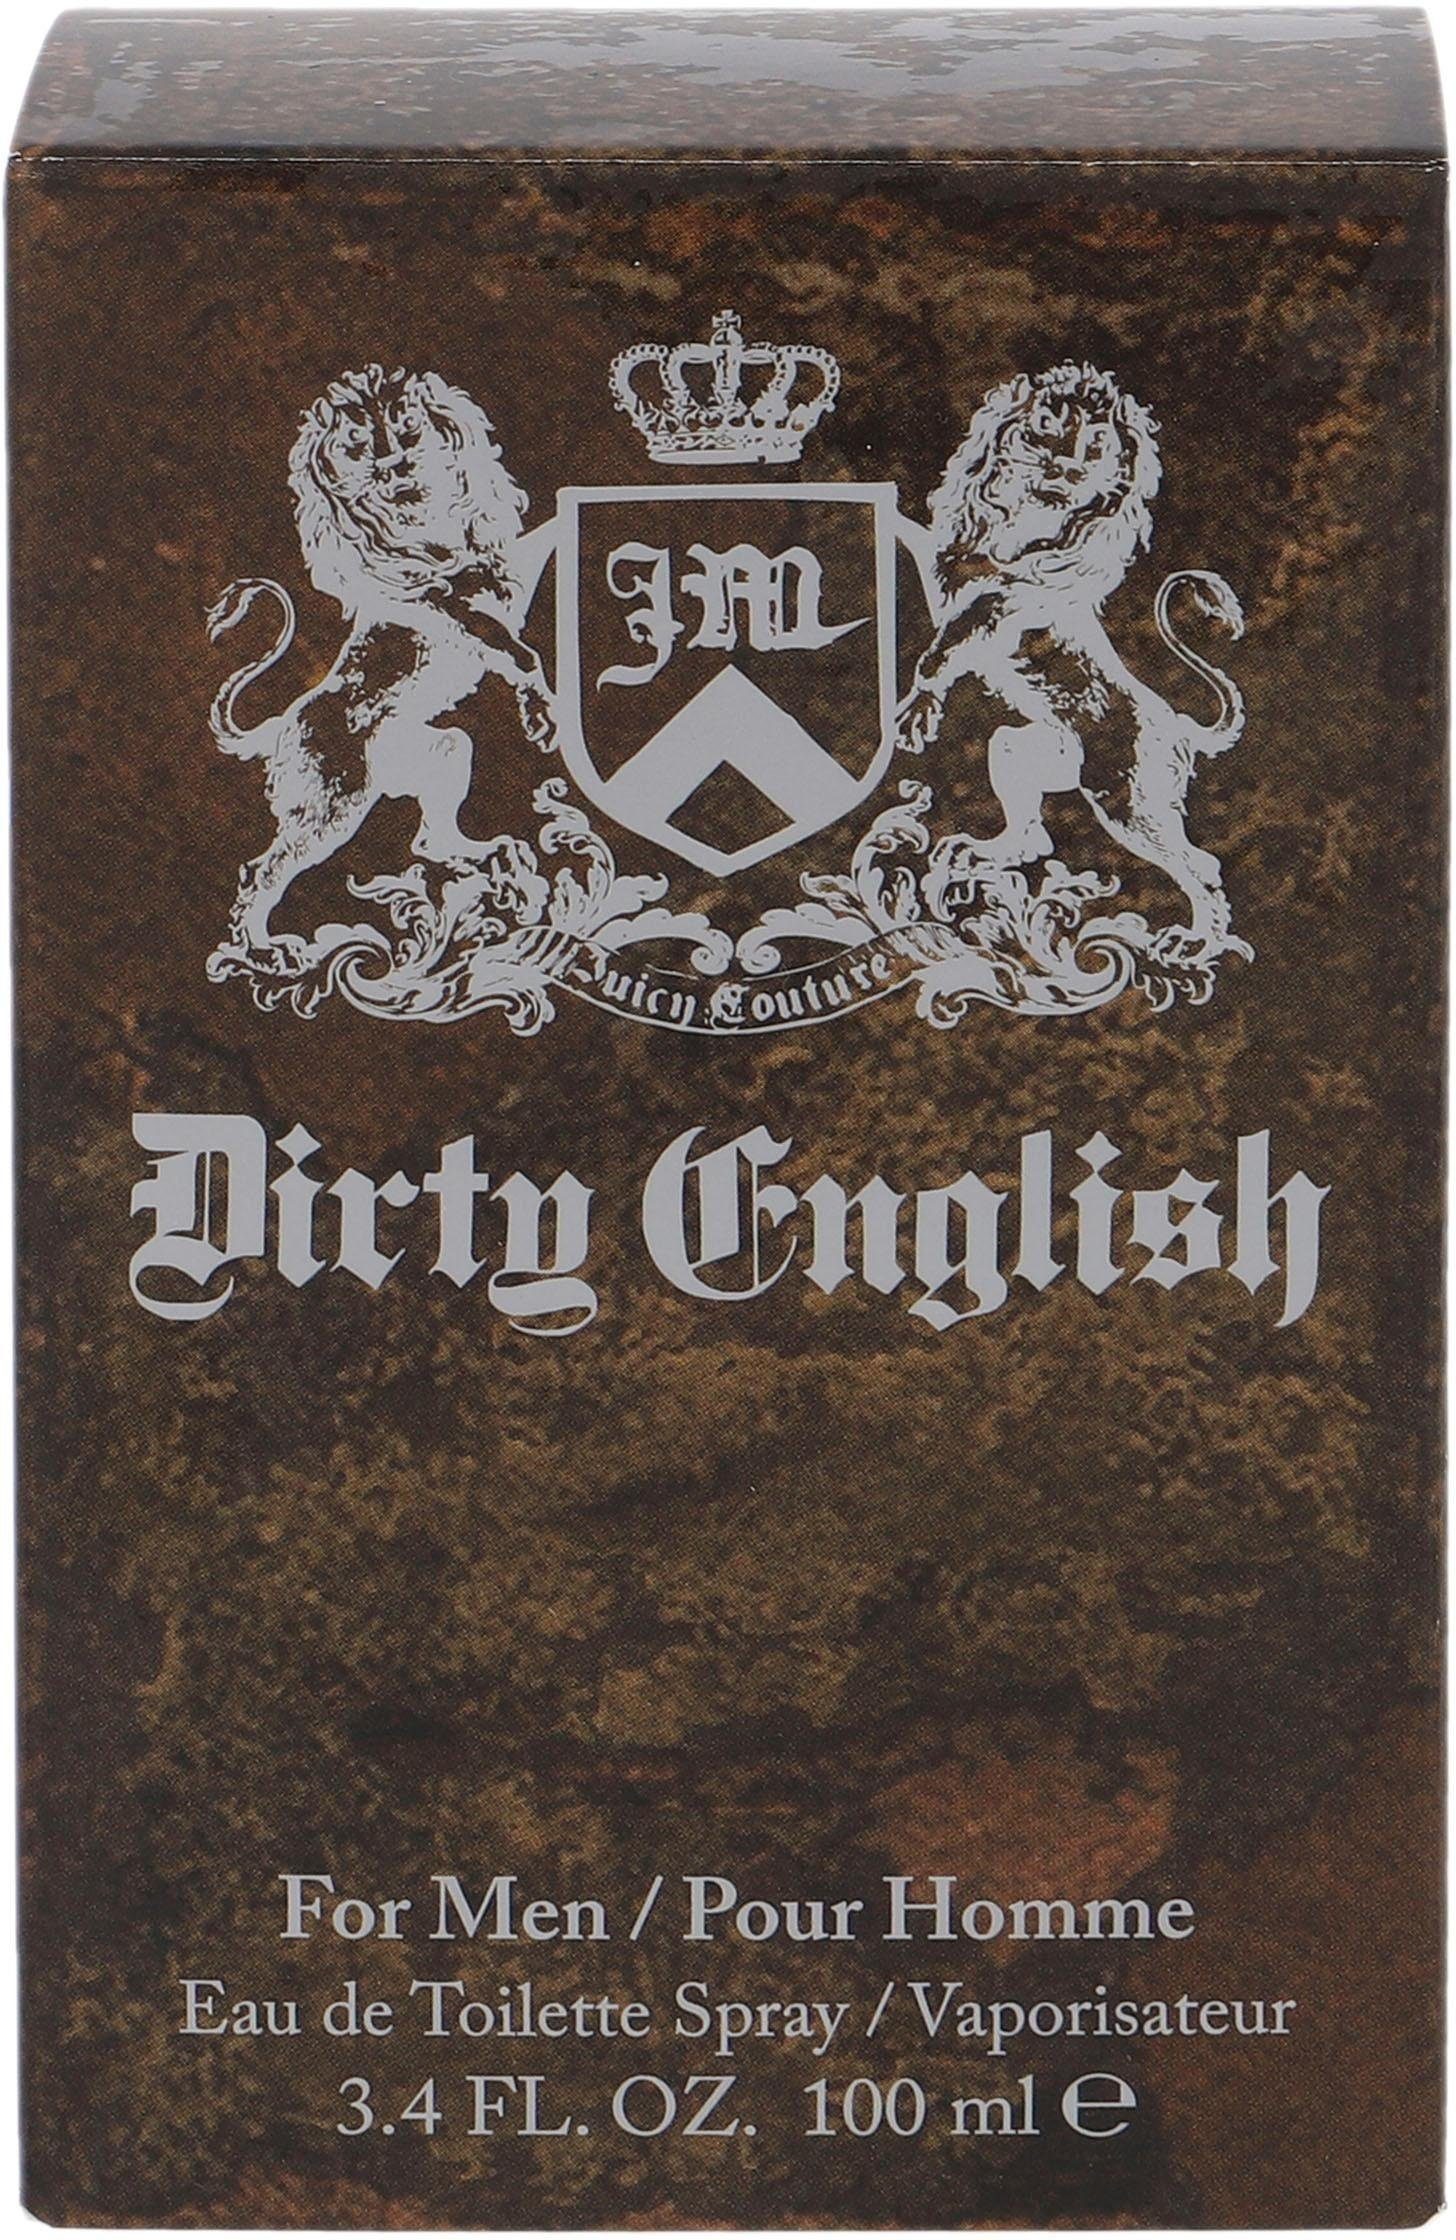 Juicy Juicy de Eau Couture English Dirty Toilette by